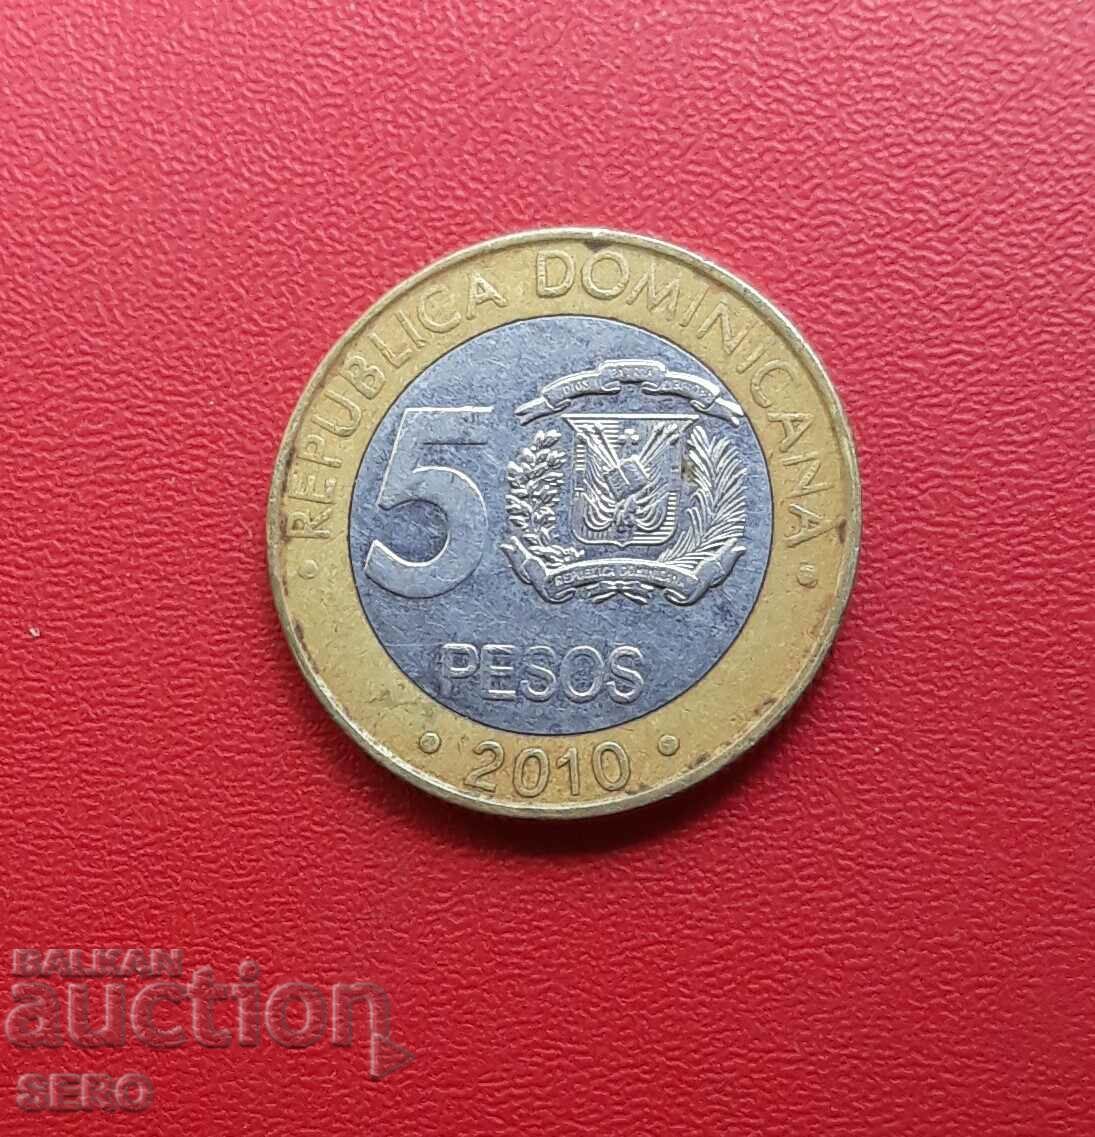 Dominican Republic-5 pesos 2010